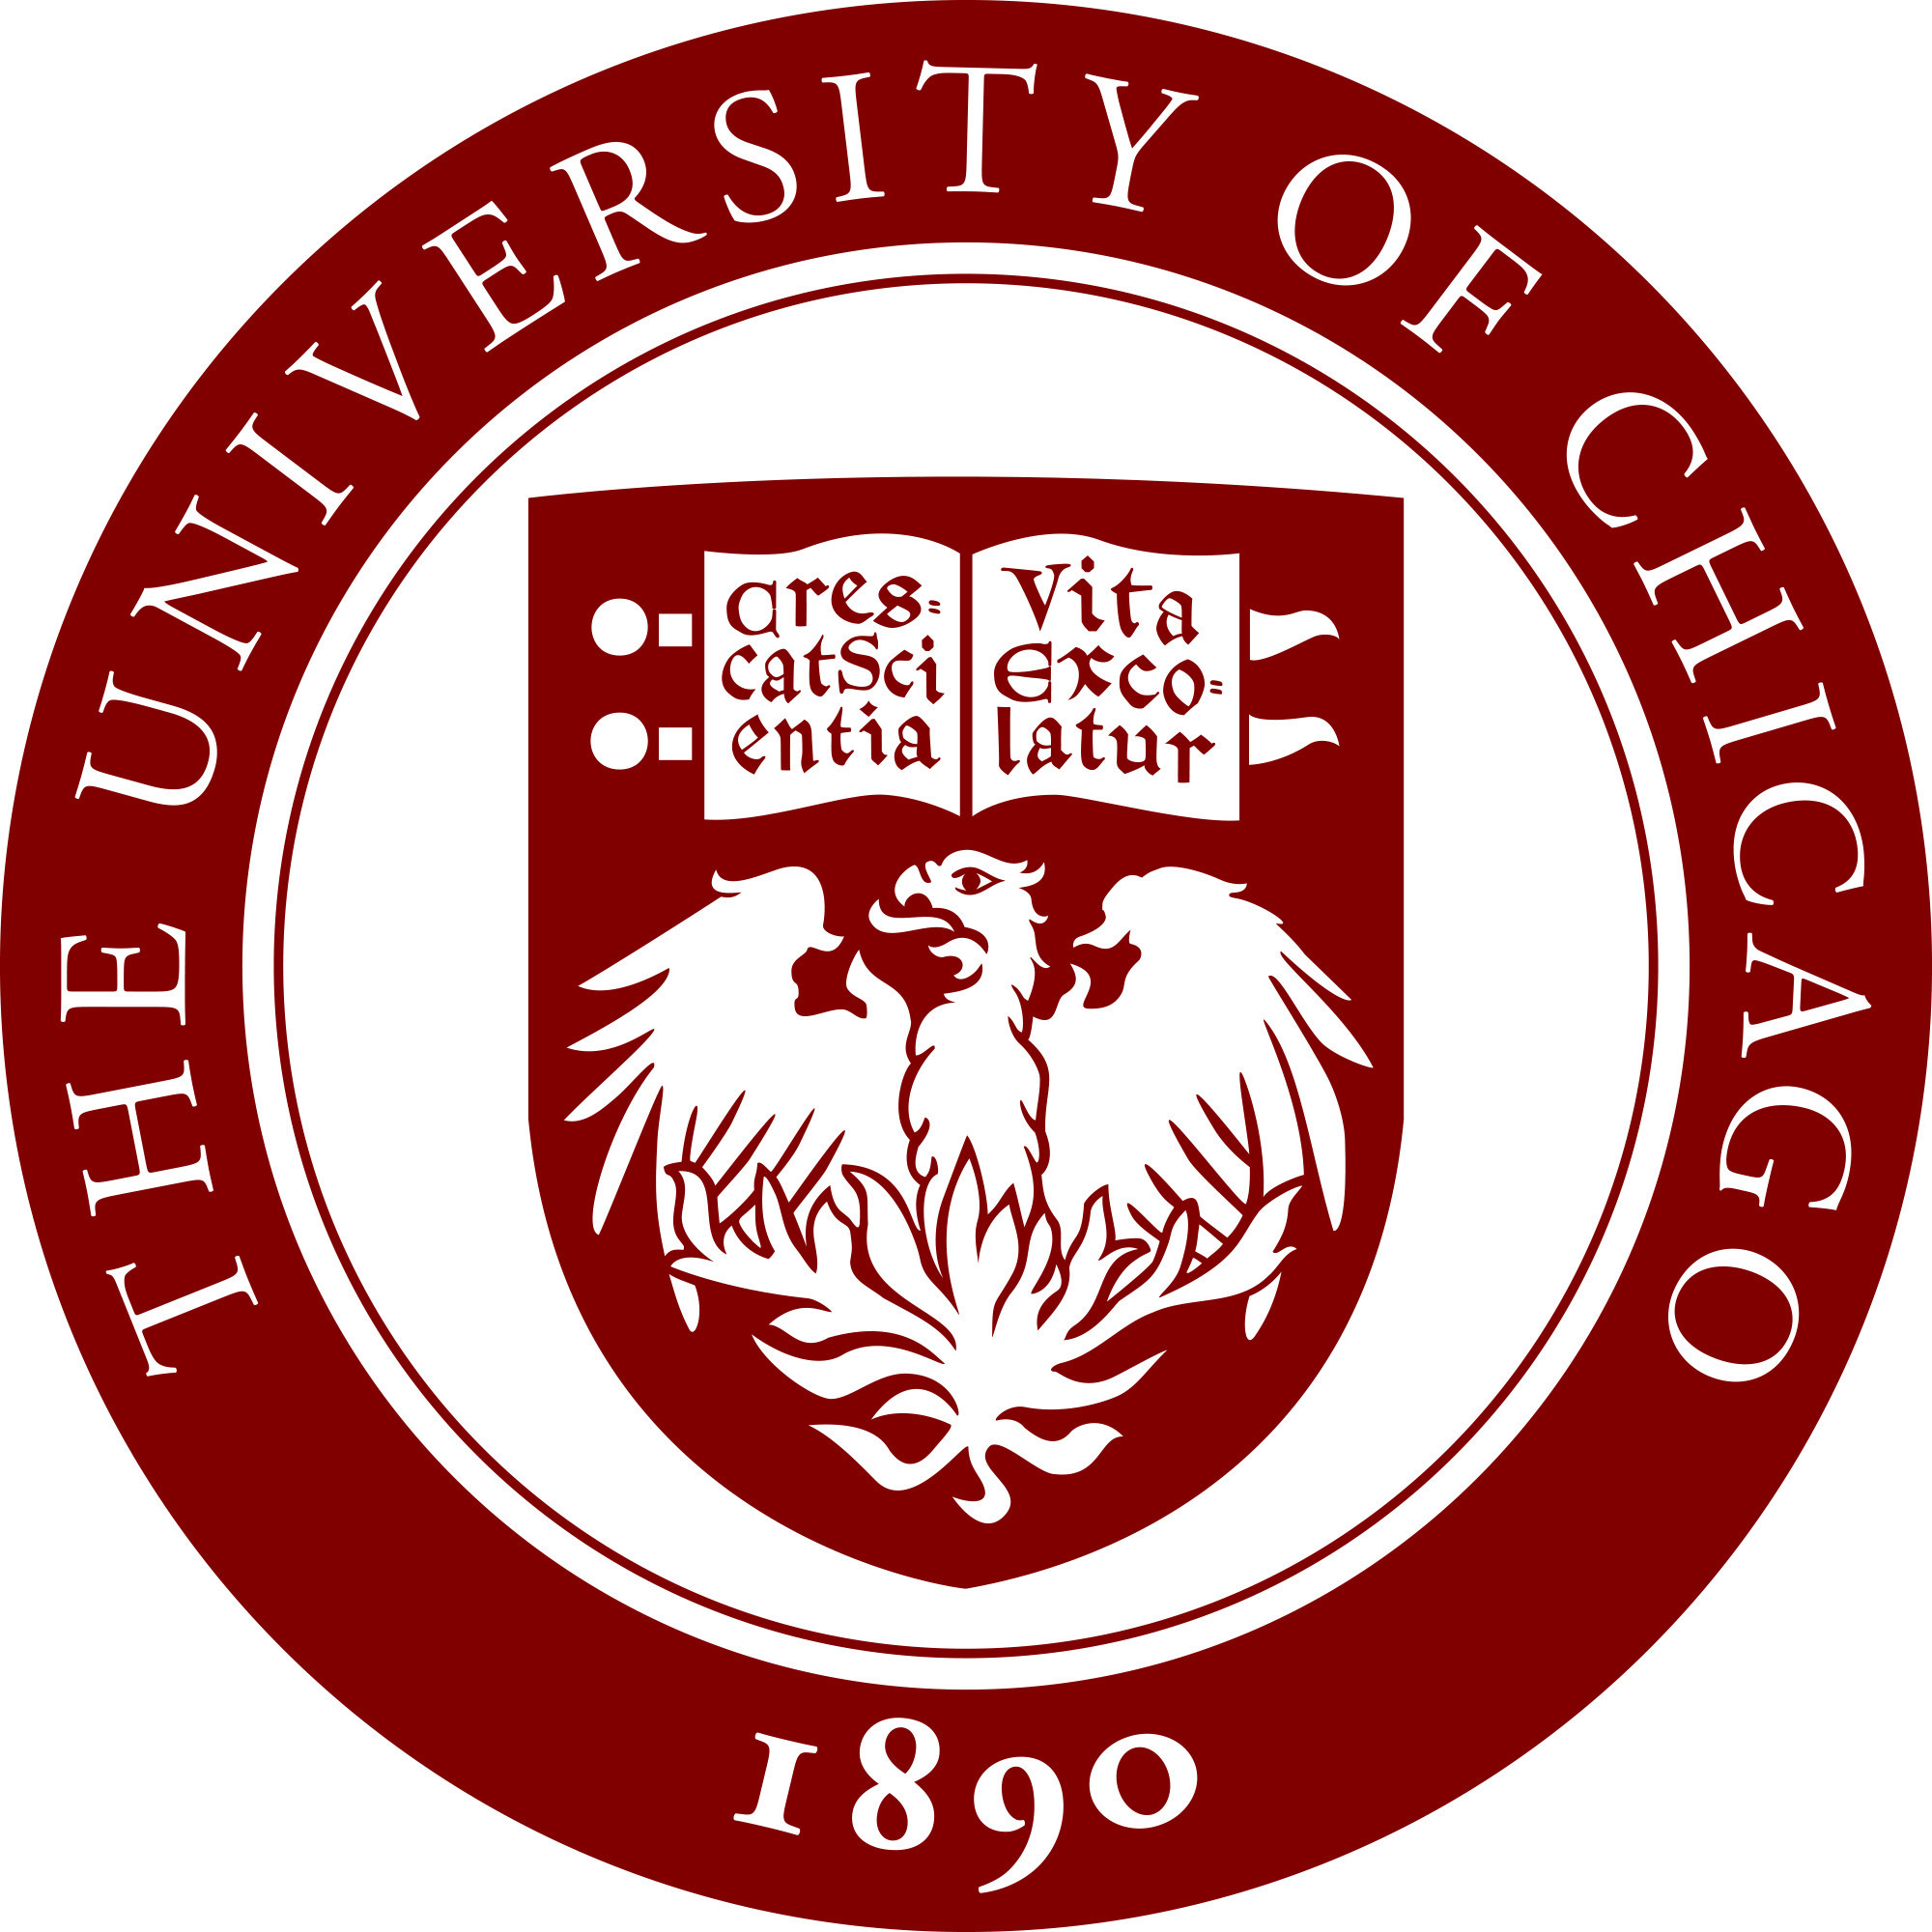 Univ. of Chicago